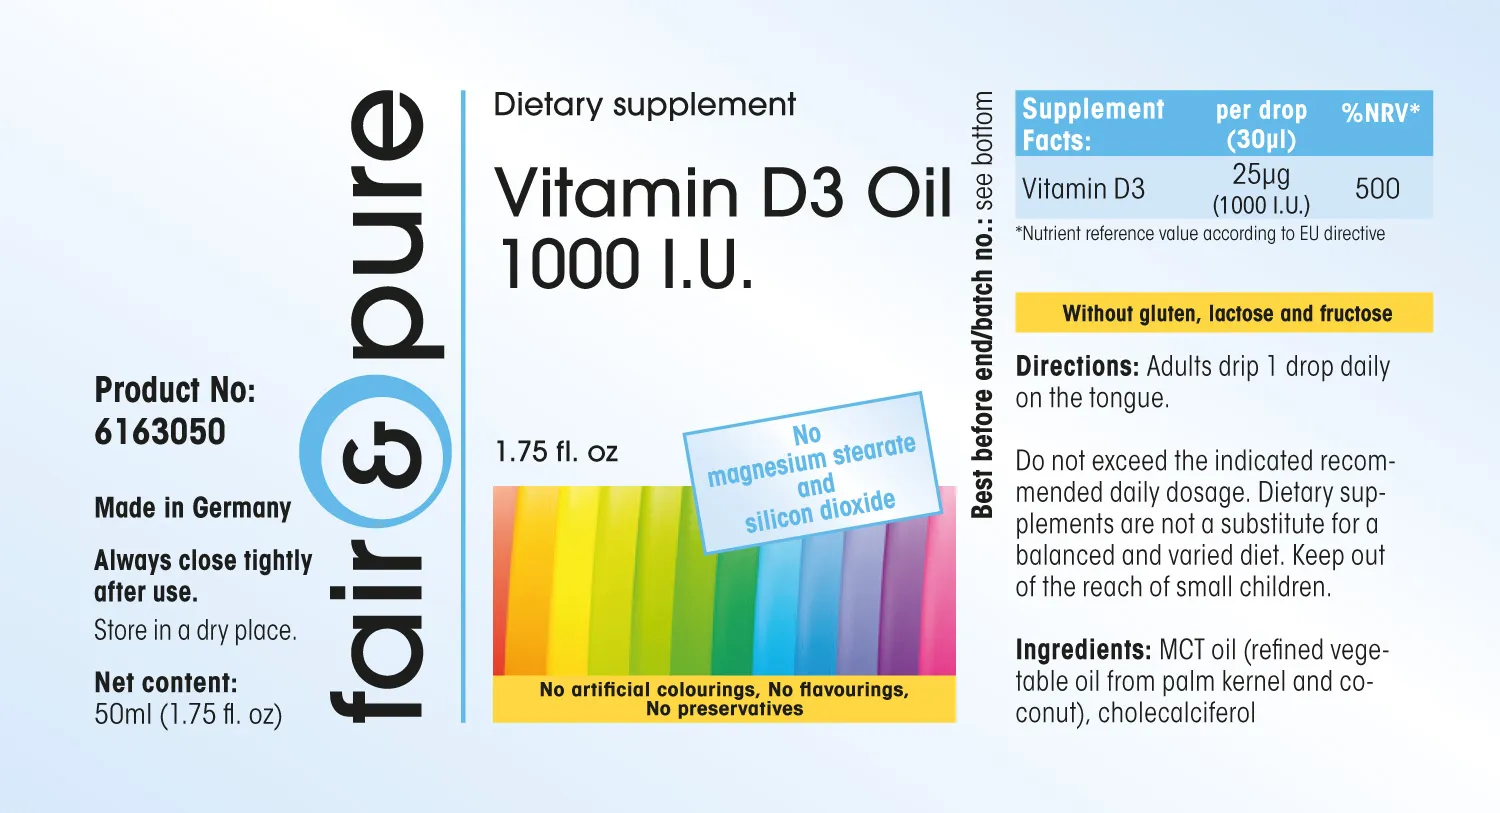 Vitamina D3 líquida 1000 U.I.